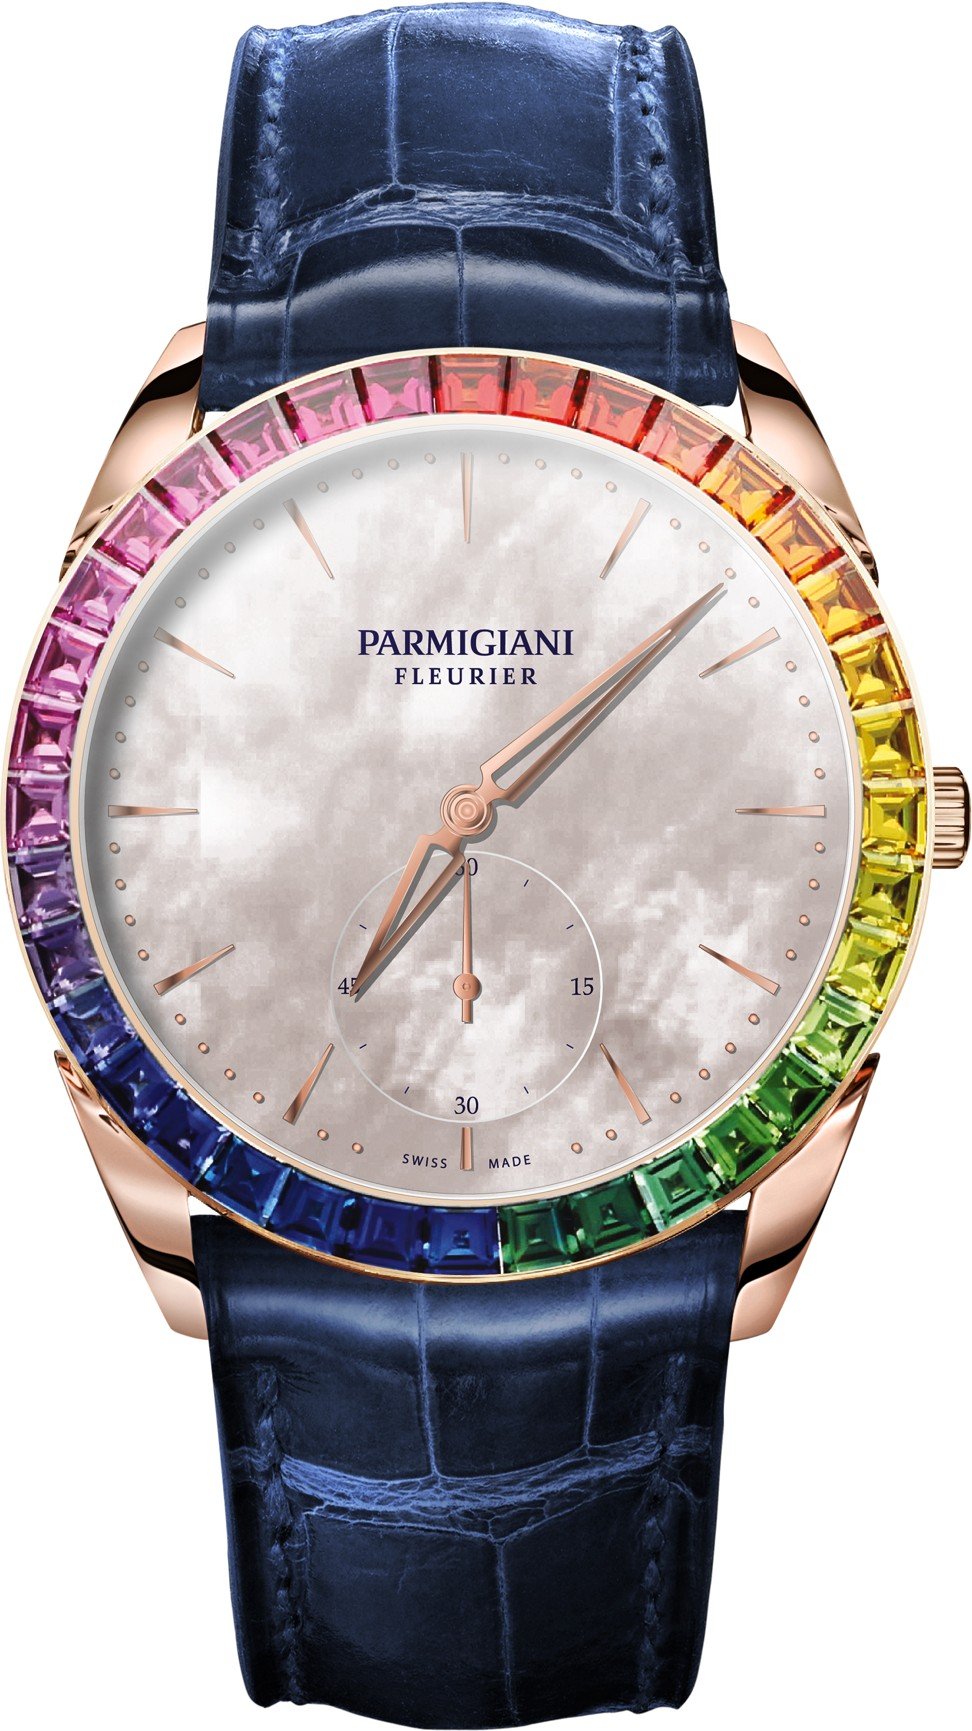 Parmigiani's Tonda 1950 watch with rainbow gems around the bezel